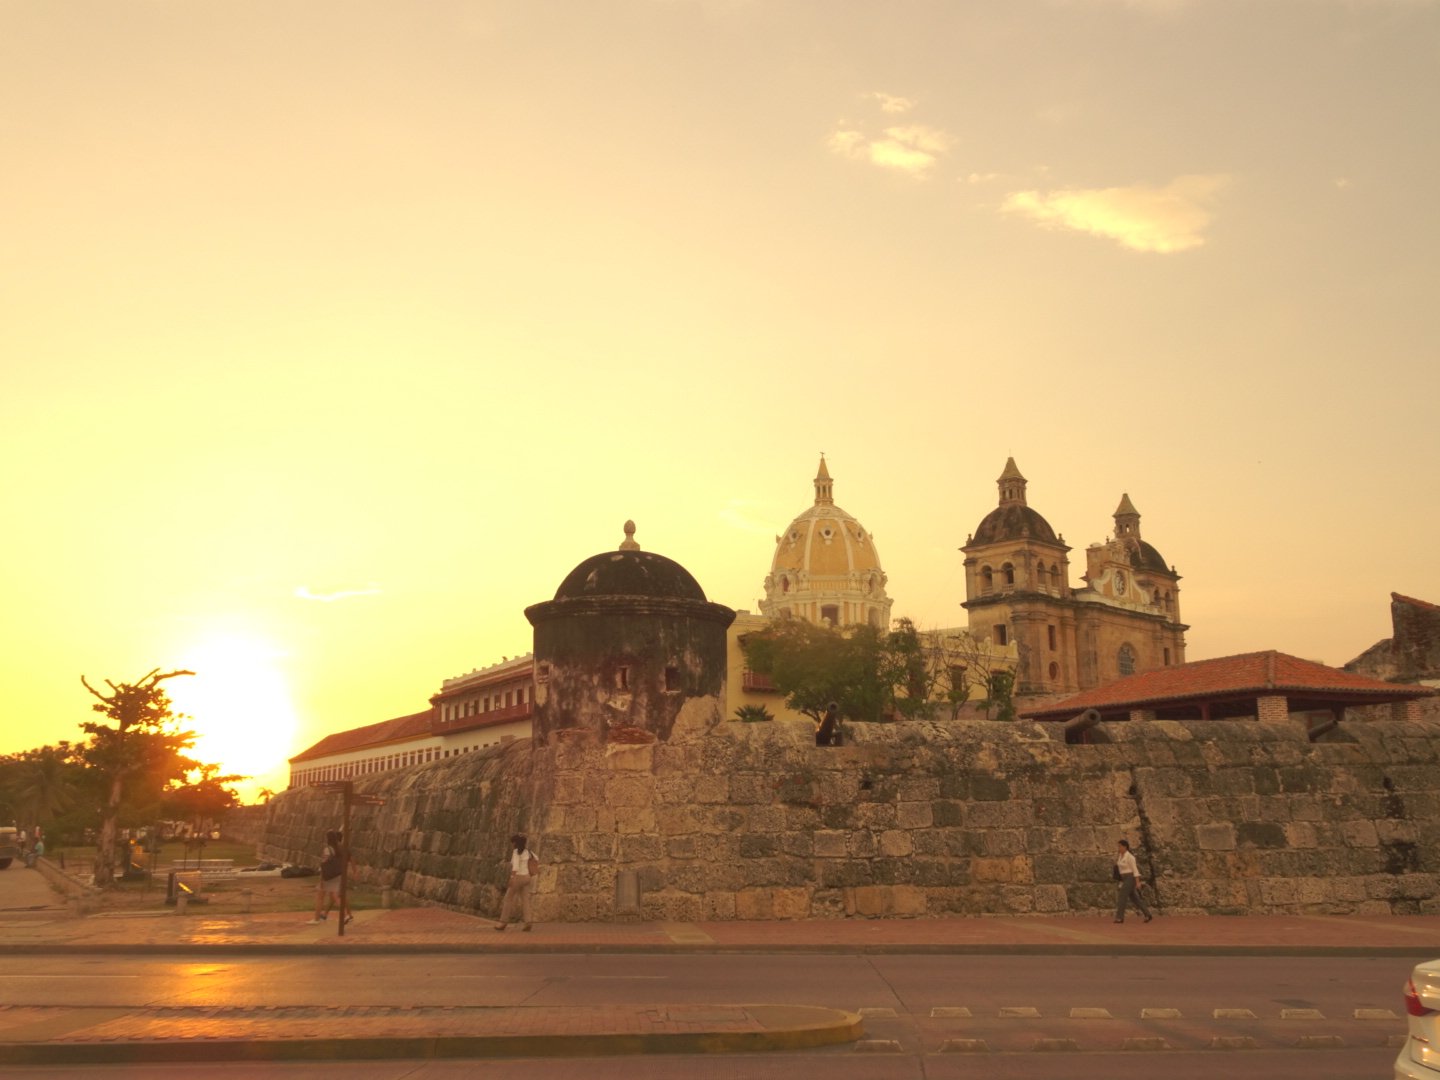 <img src="images/" width="800" height="600" alt="cartagena - DSC01885 - Colombia: Cartagena, The Tourist Capital">